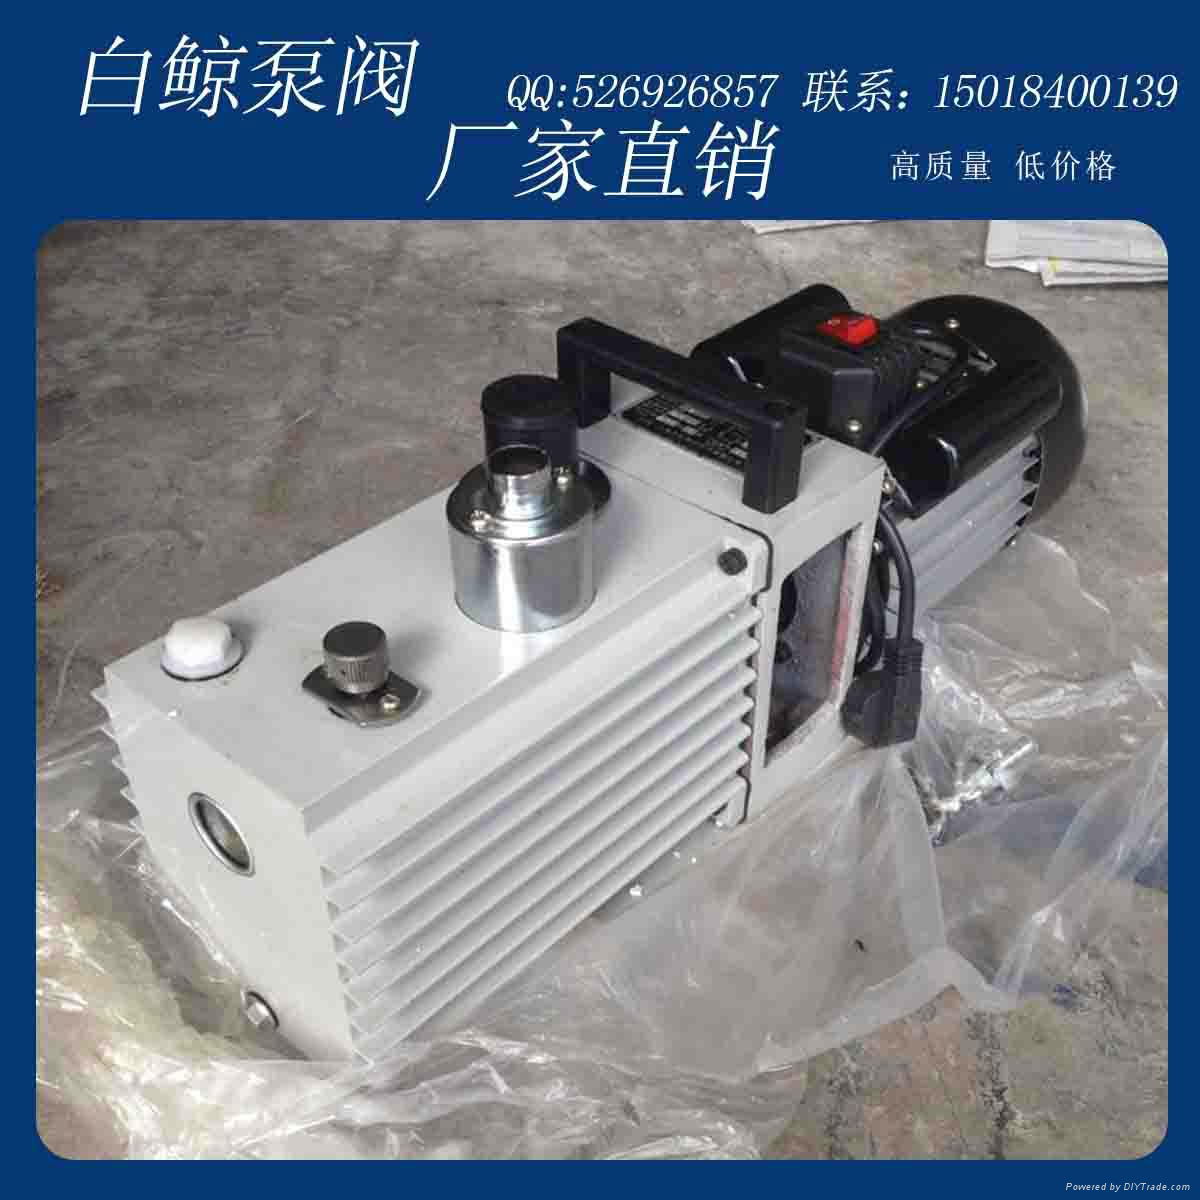 2xz－15 Double Stage Structure Rotary Vane mini Vacuum pump  3